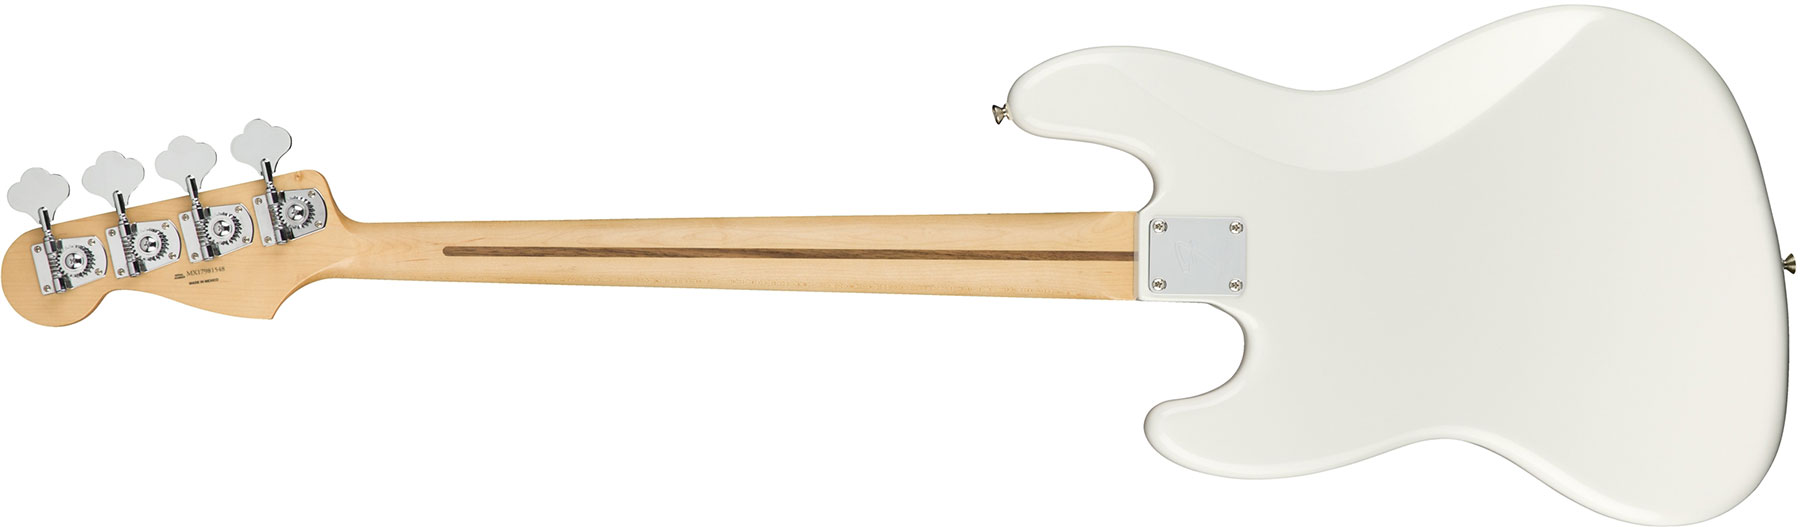 Fender Jazz Bass Player Mex Mn - Polar White - Bajo eléctrico de cuerpo sólido - Variation 1